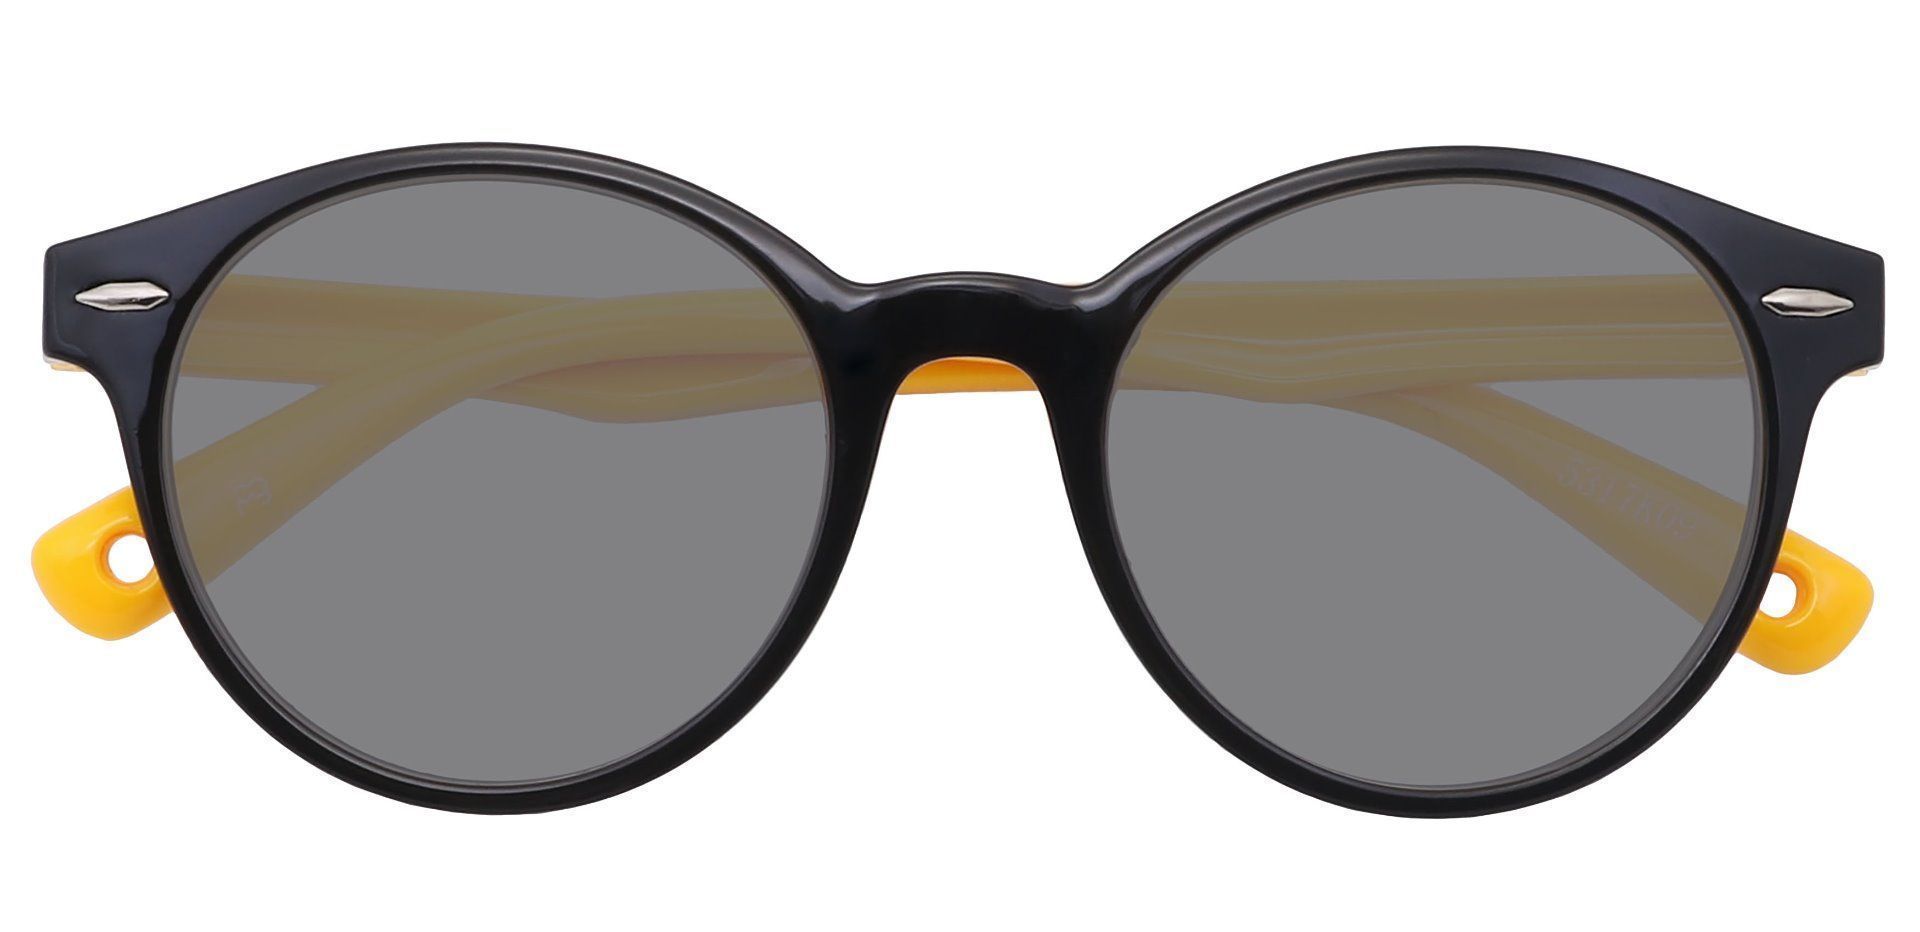 Harris Round Single Vision Sunglasses - Black Frame With Gray Lenses